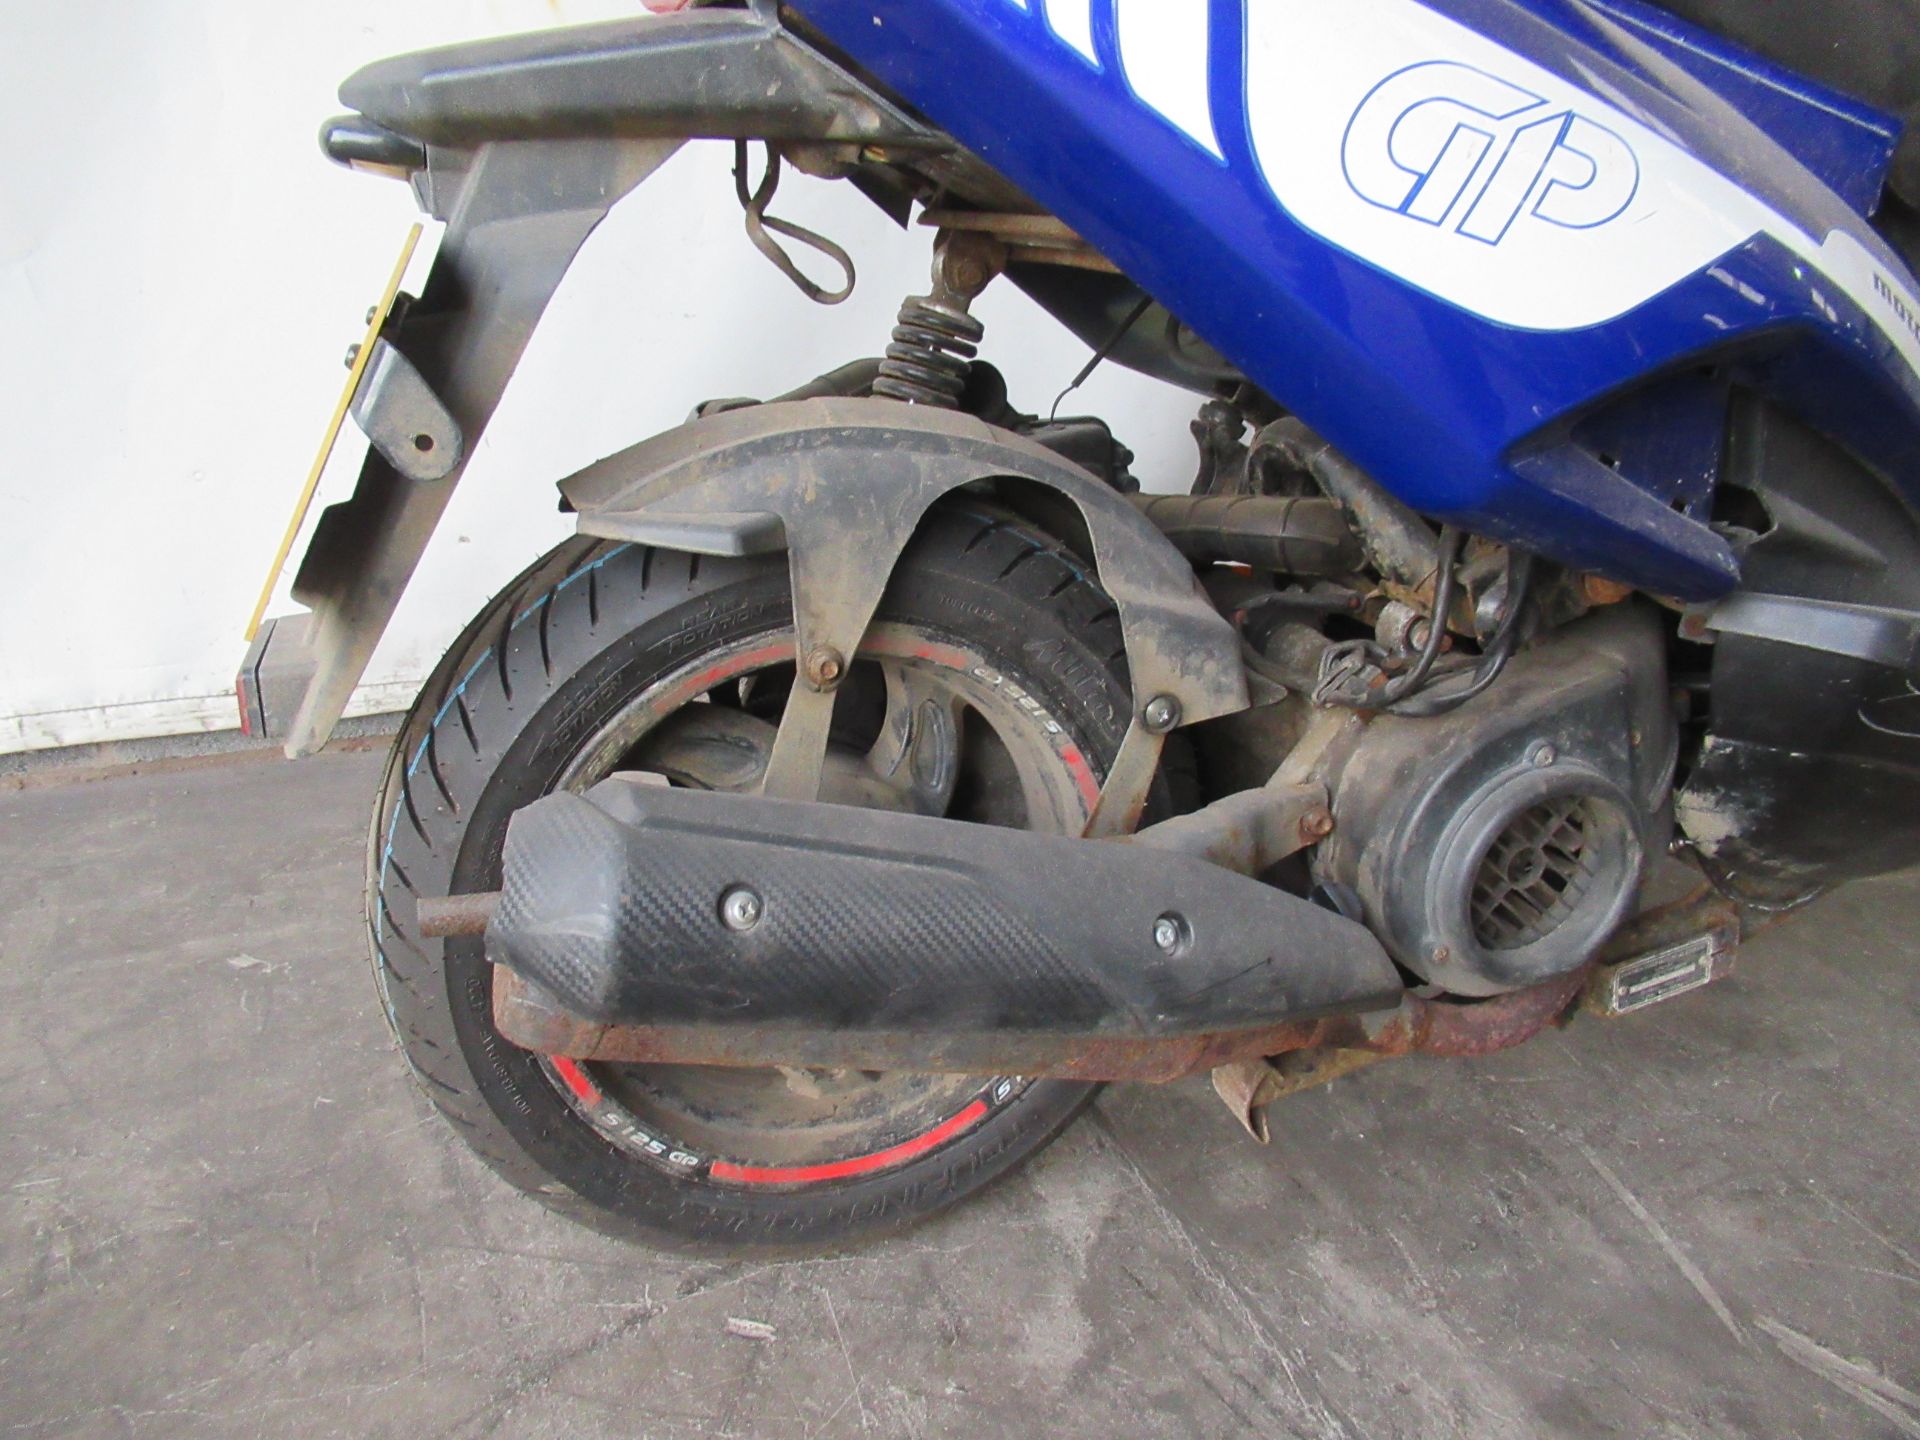 3x Motorini GP125i motorbikes - Image 13 of 30